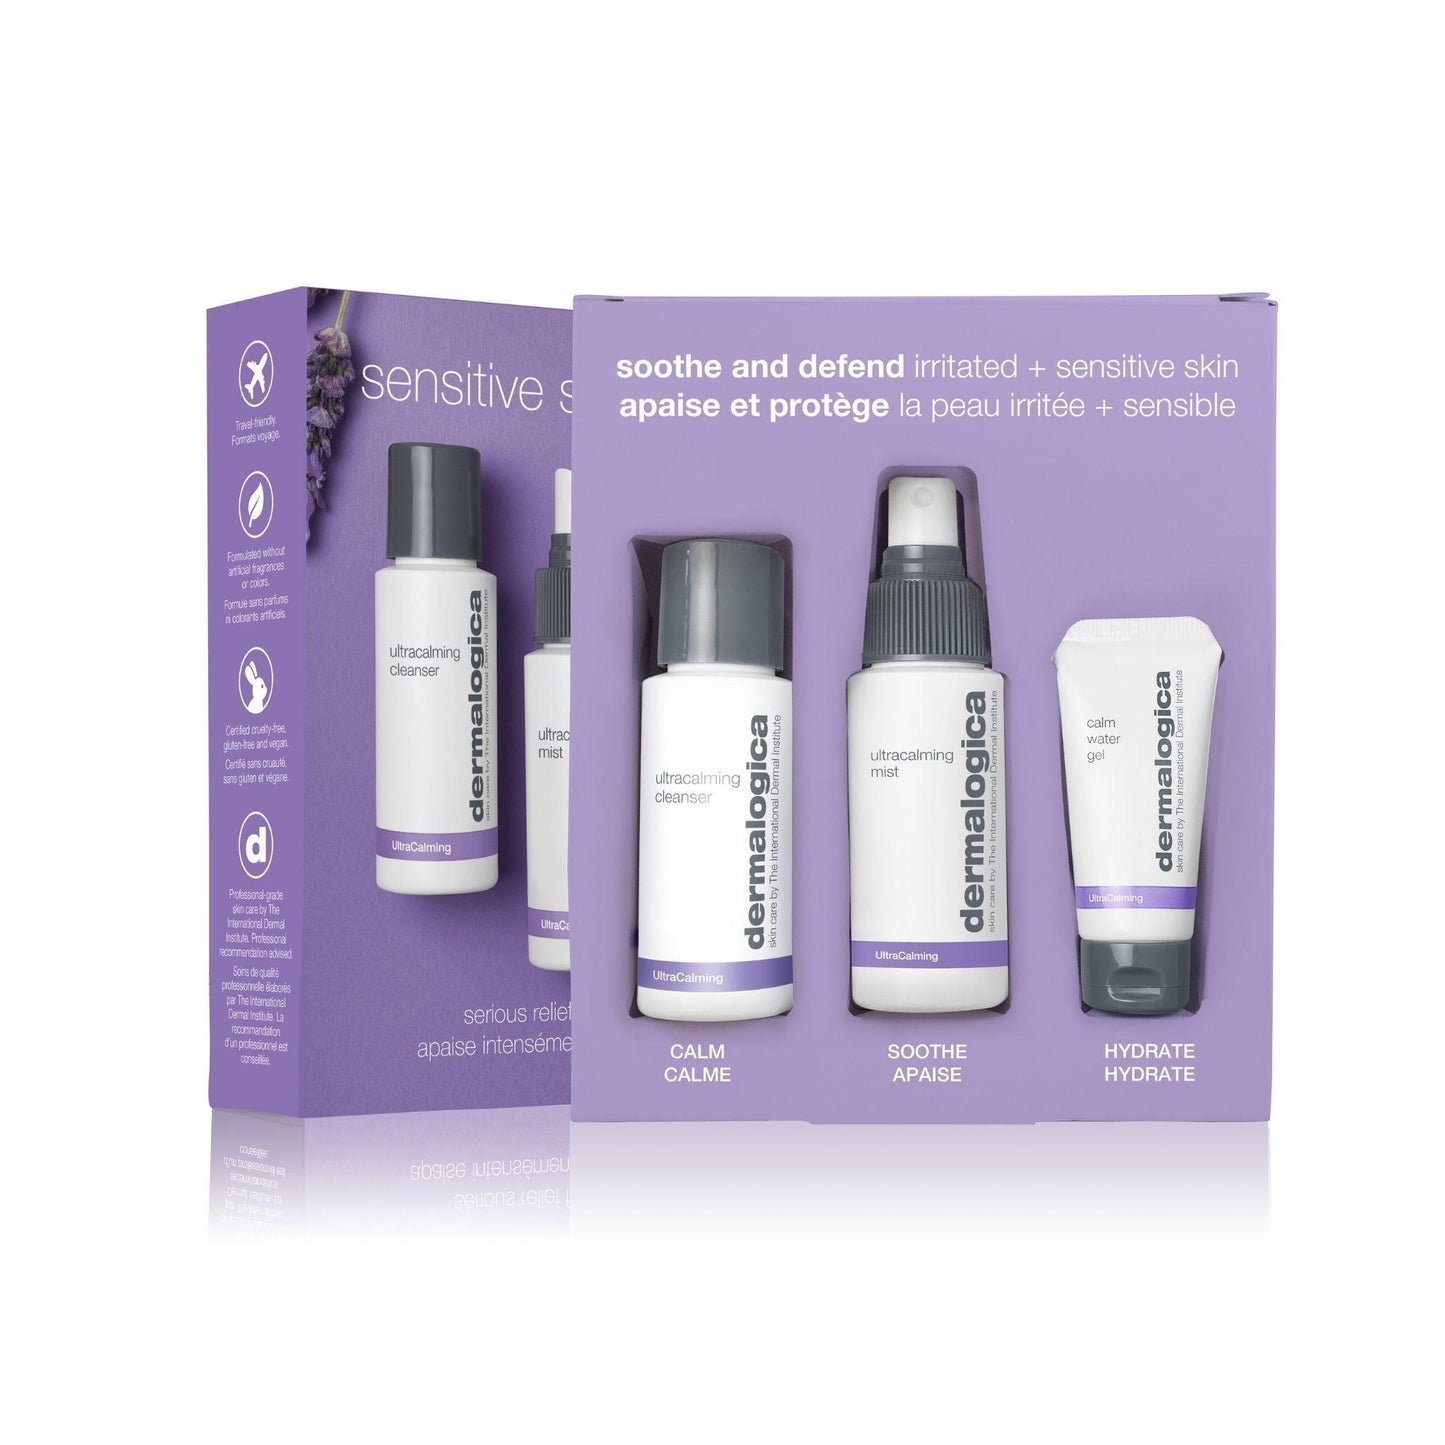 sensitive skin rescue kit - Dermalogica Singapore